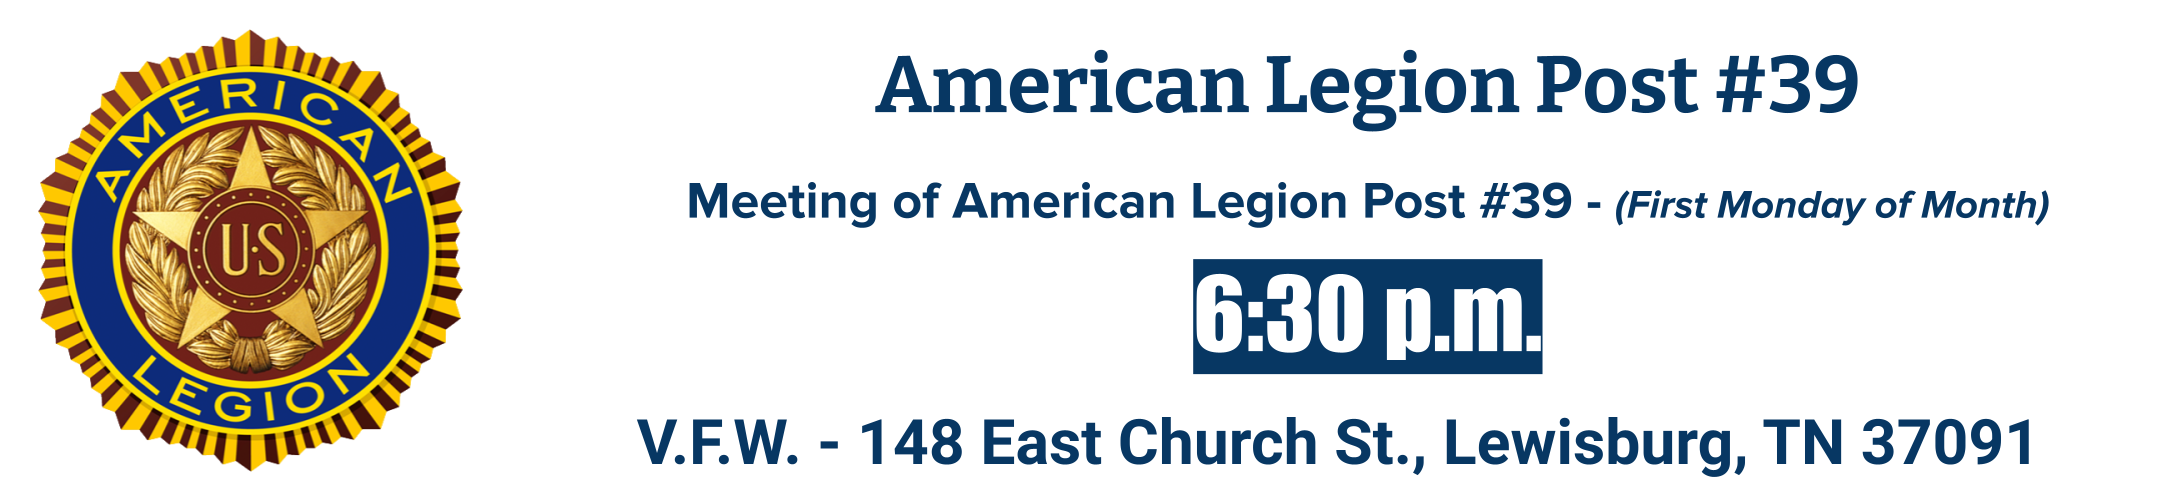 American Legion Post #39 Meeting of American Legion Post #39 - (First Monday of Month) ETD V.F.W. - 148 East Church St., Lewisburg, TN 37091